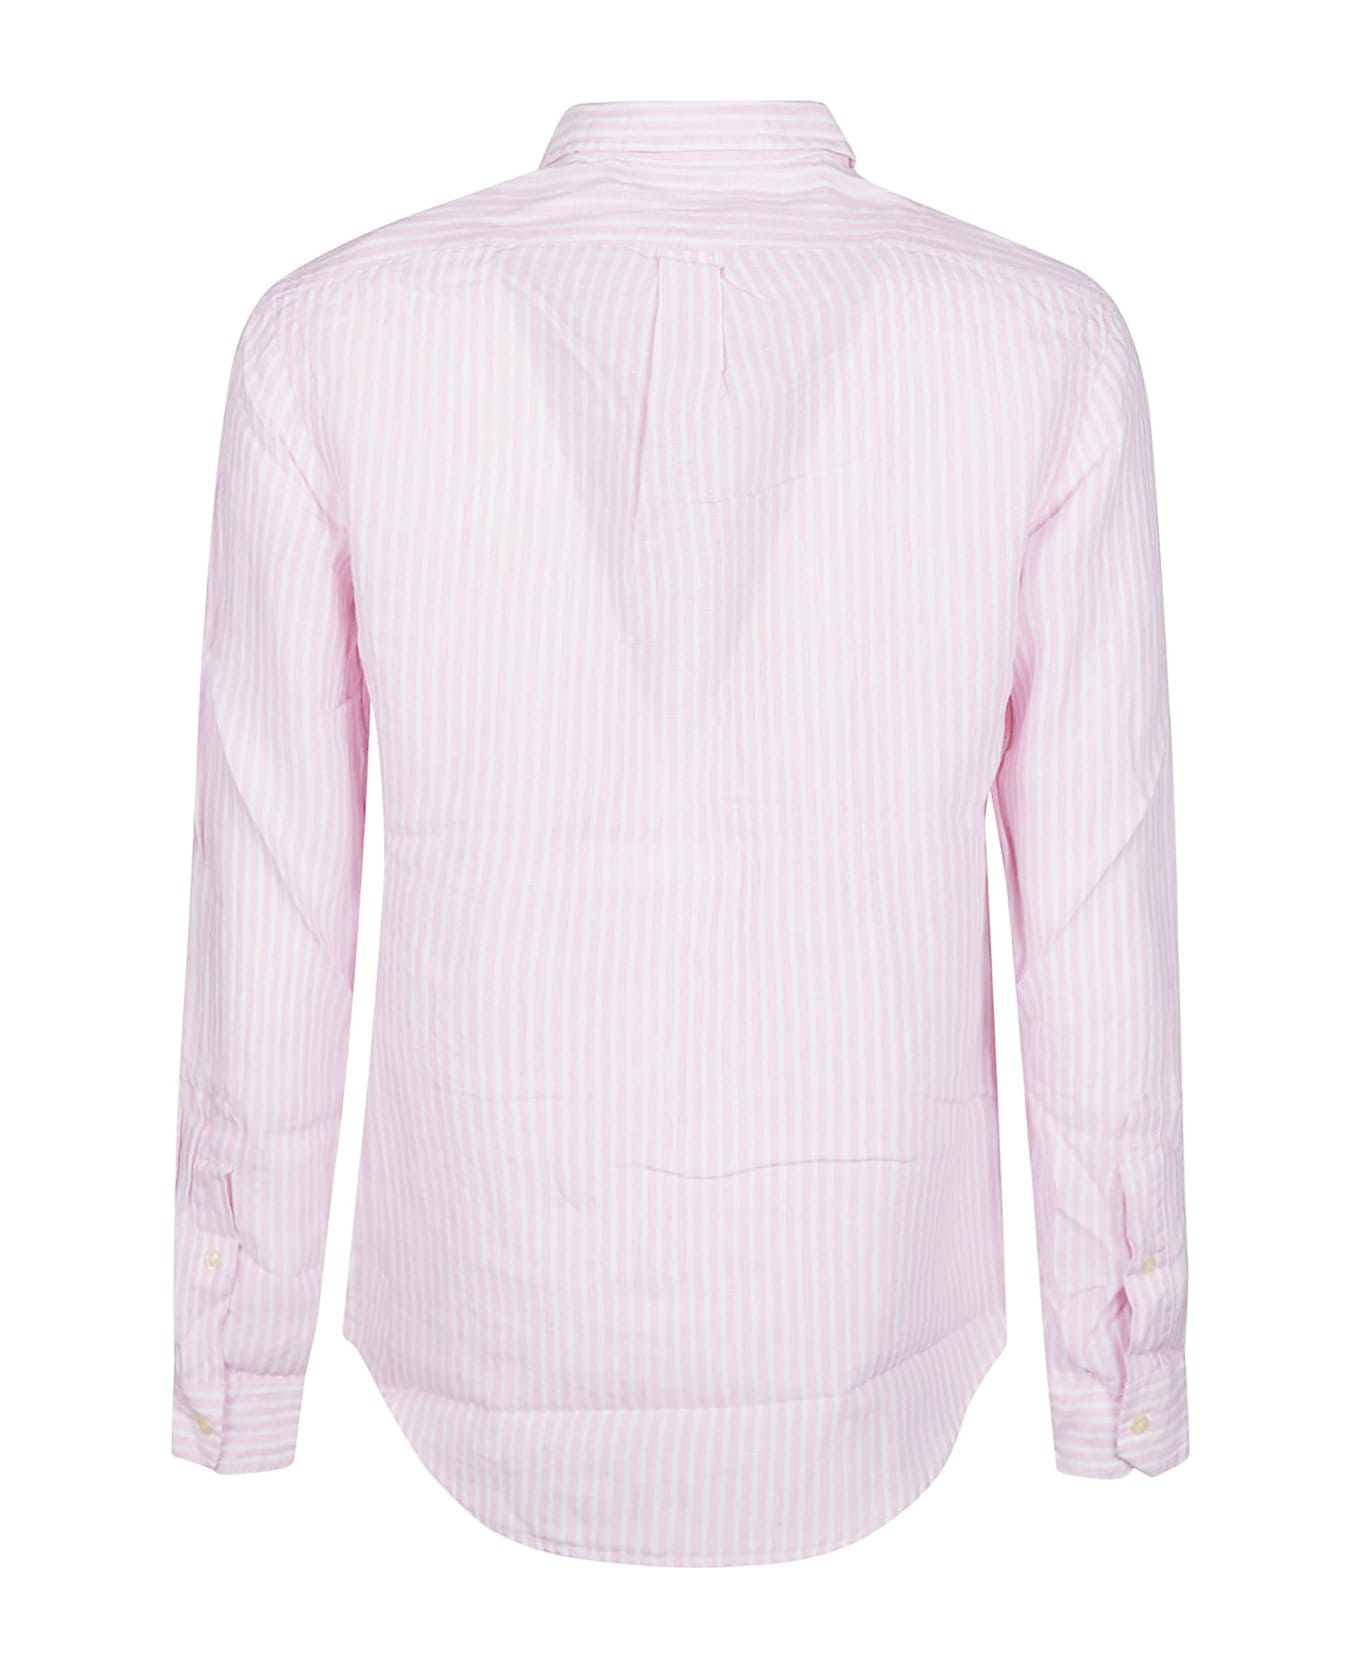 Polo Ralph Lauren Long Sleeve Sport Shirt - Pink/white シャツ